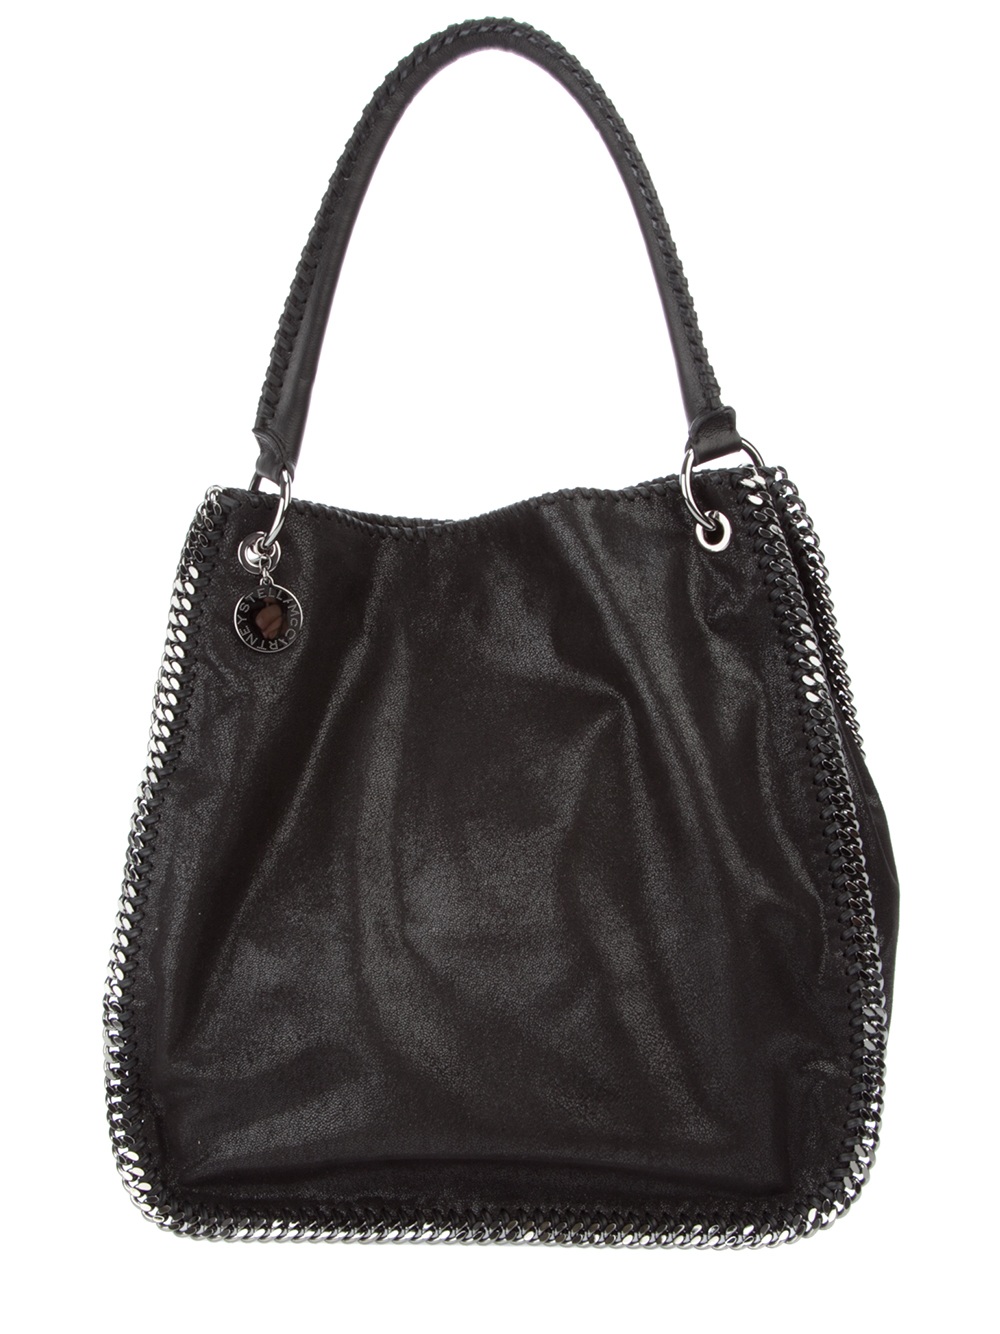 Stella Mccartney Falabella Hobo Bag in Black | Lyst